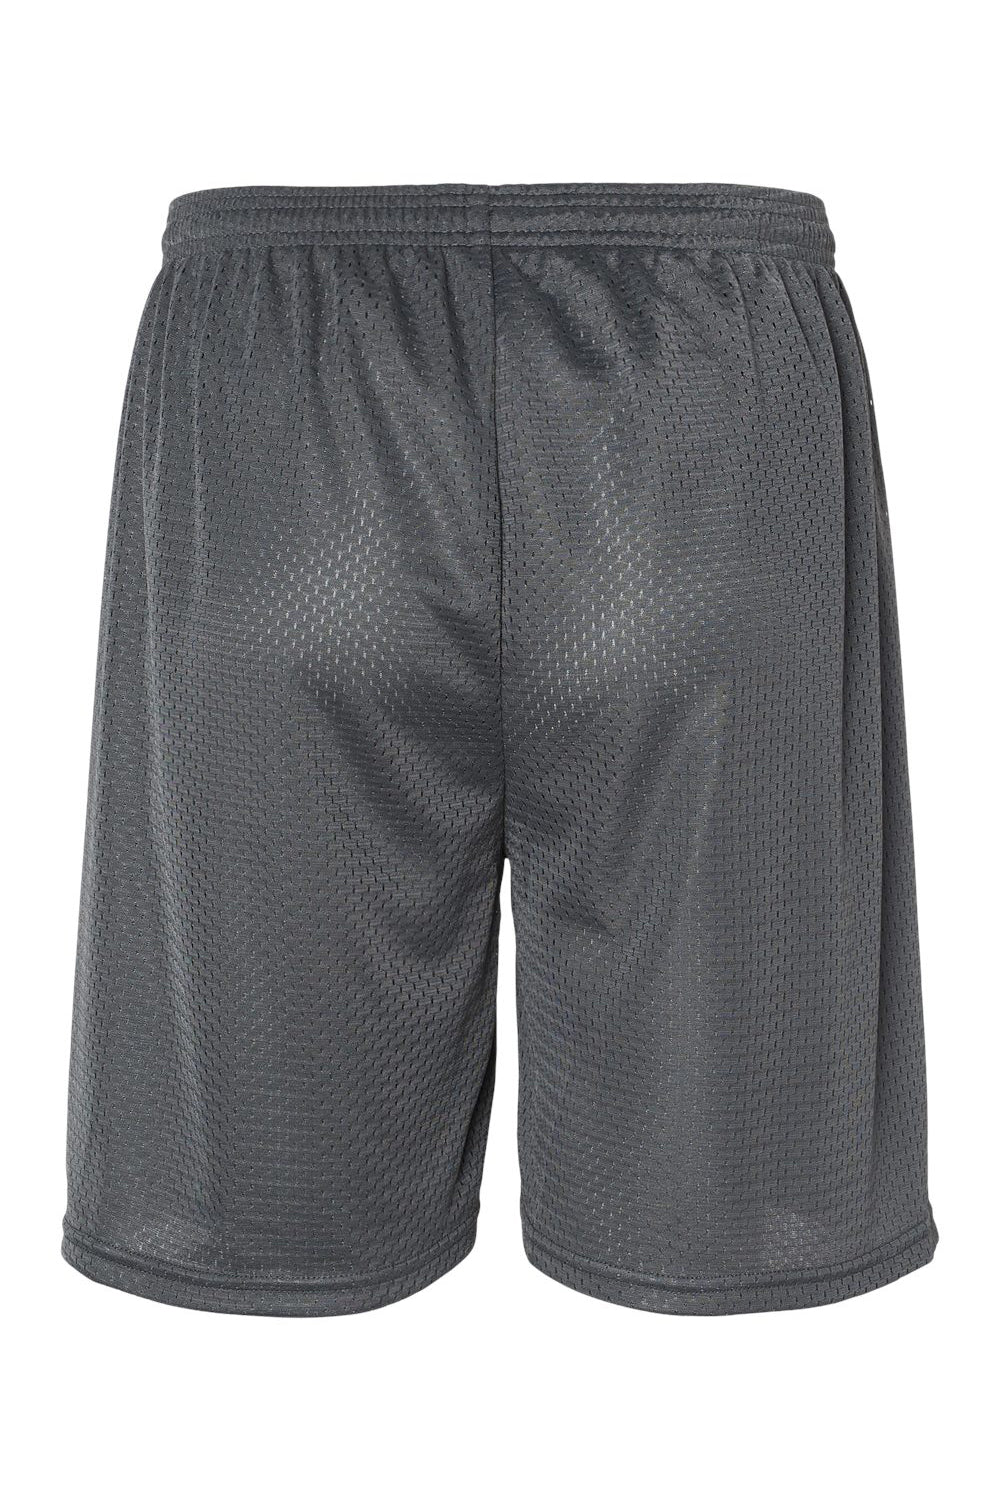 C2 Sport 5107 Mens Mesh Shorts Graphite Grey Flat Back